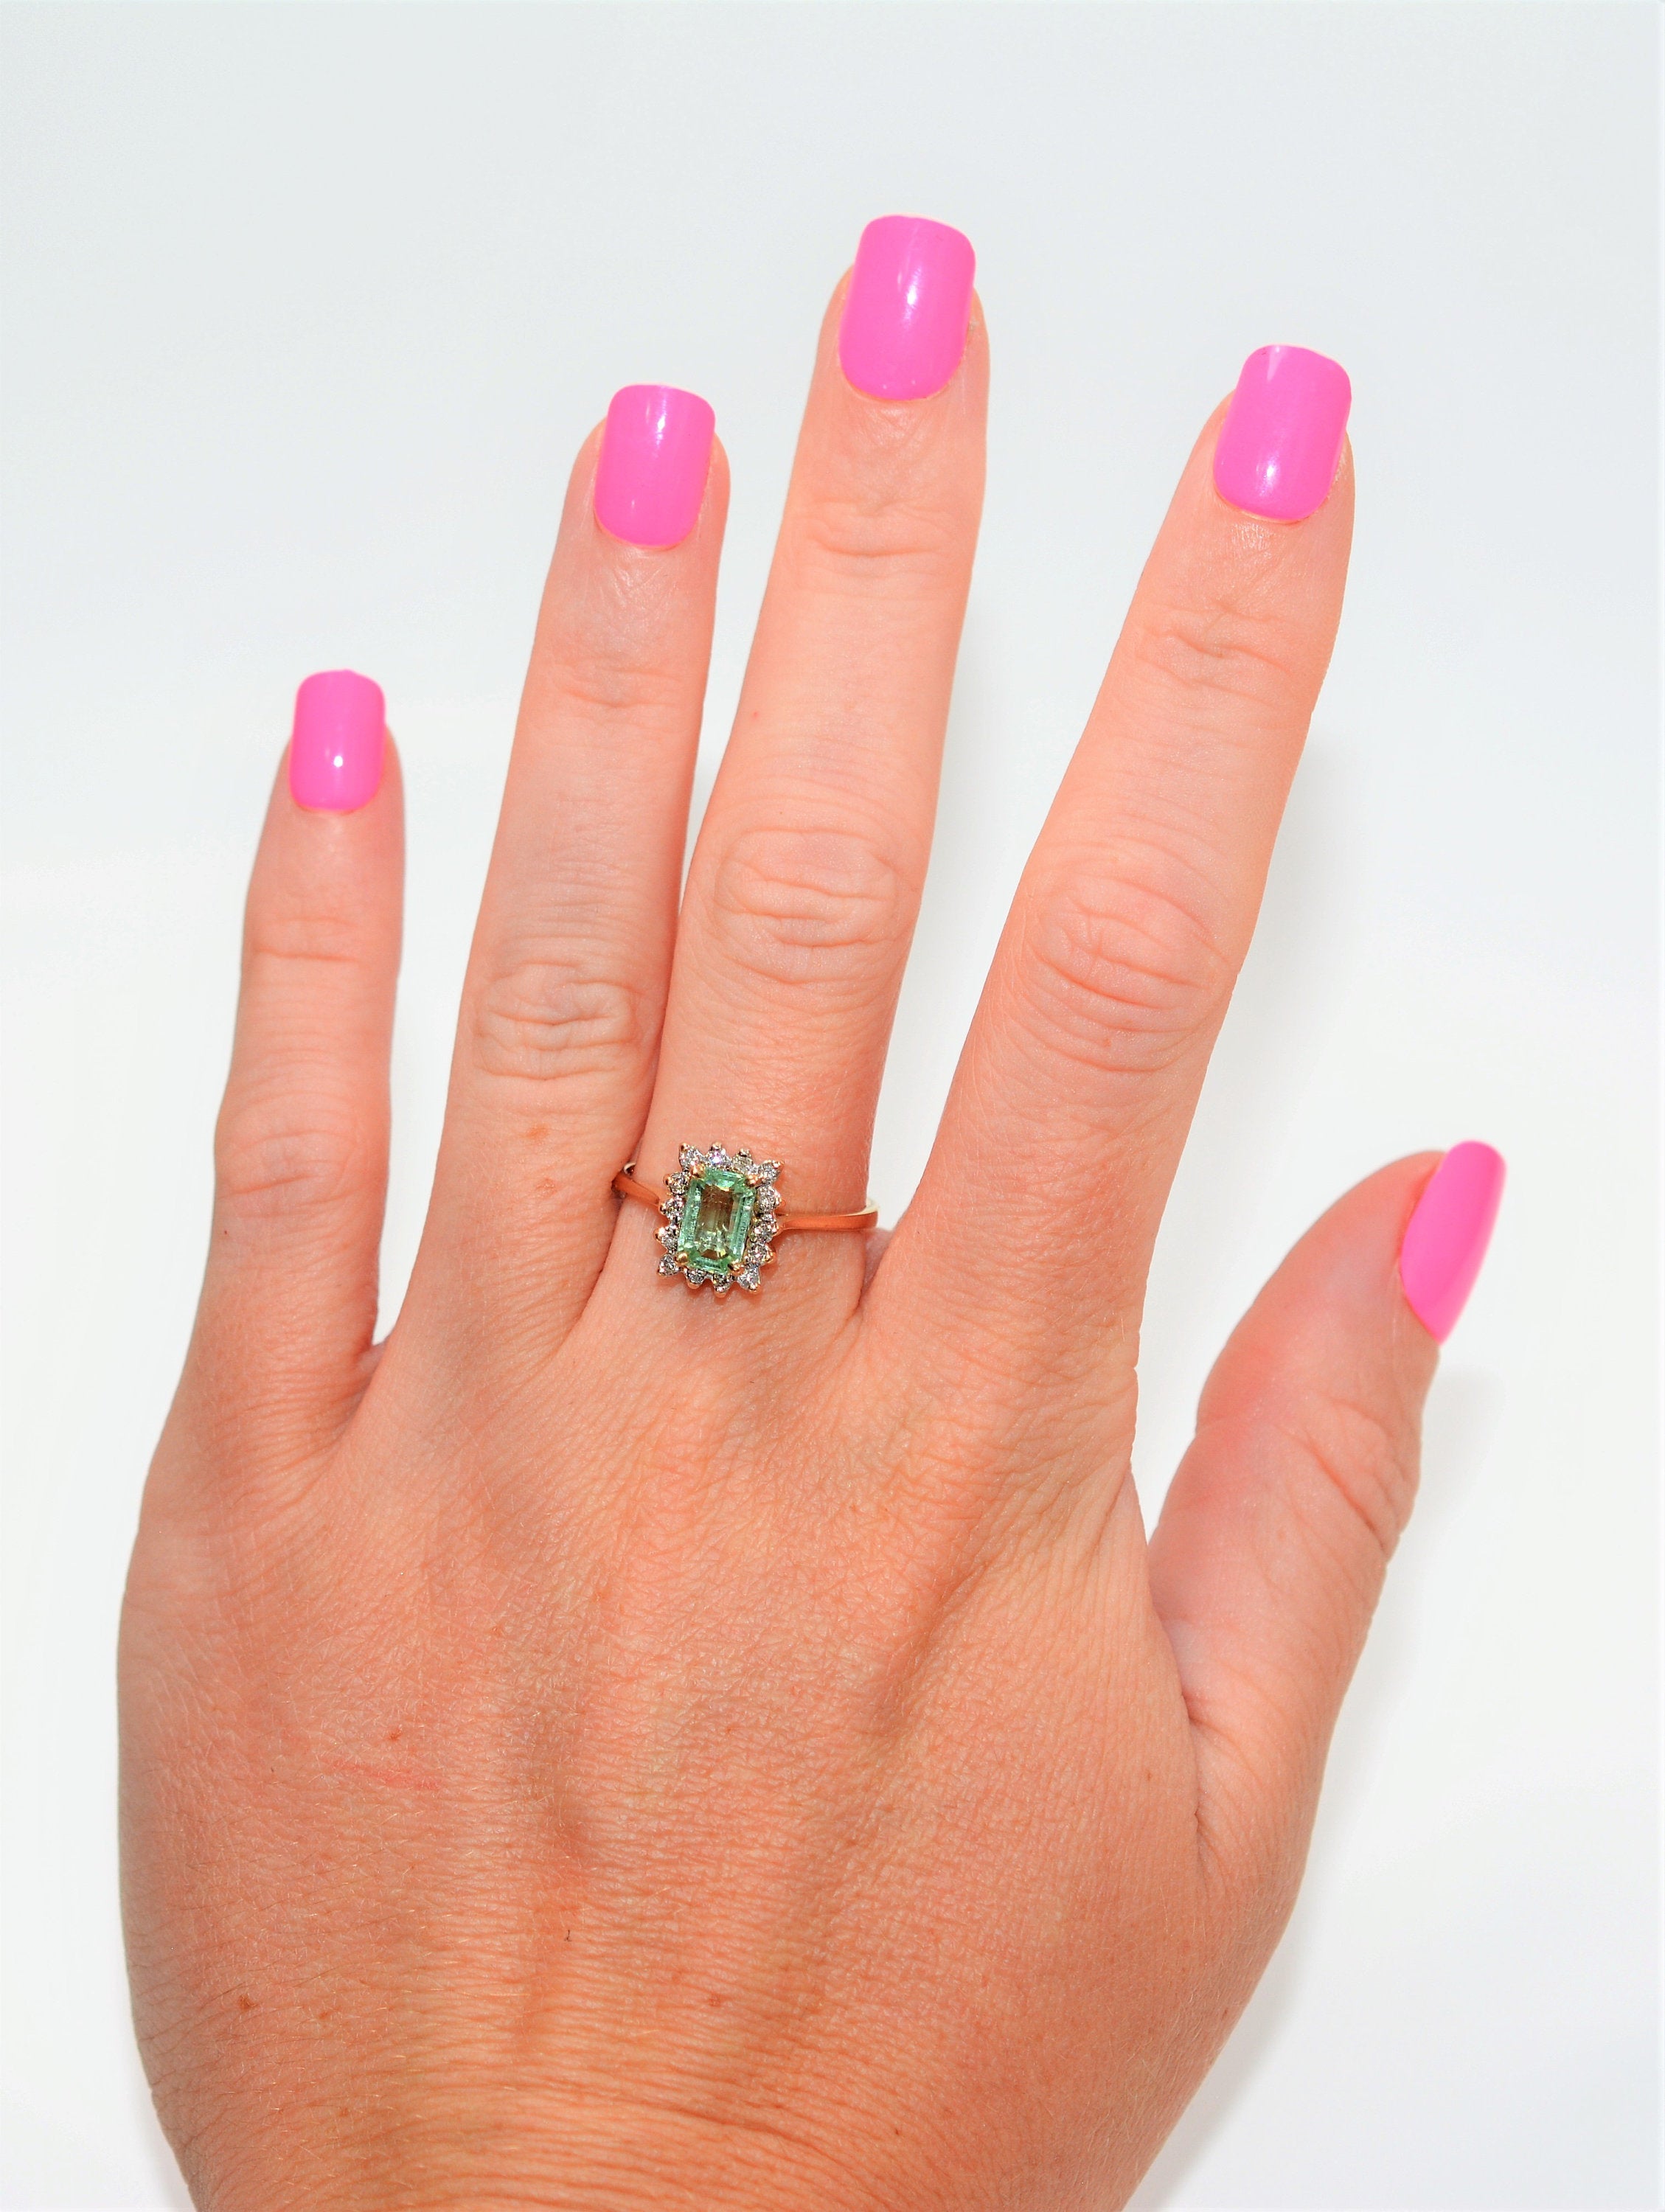 Natural Paraiba Tourmaline & Diamond Ring 14K Solid Gold 1.51tcw Rare Gemstone Women's Ring Estate Jewelry Fine Ring Engagement Ring Bridal